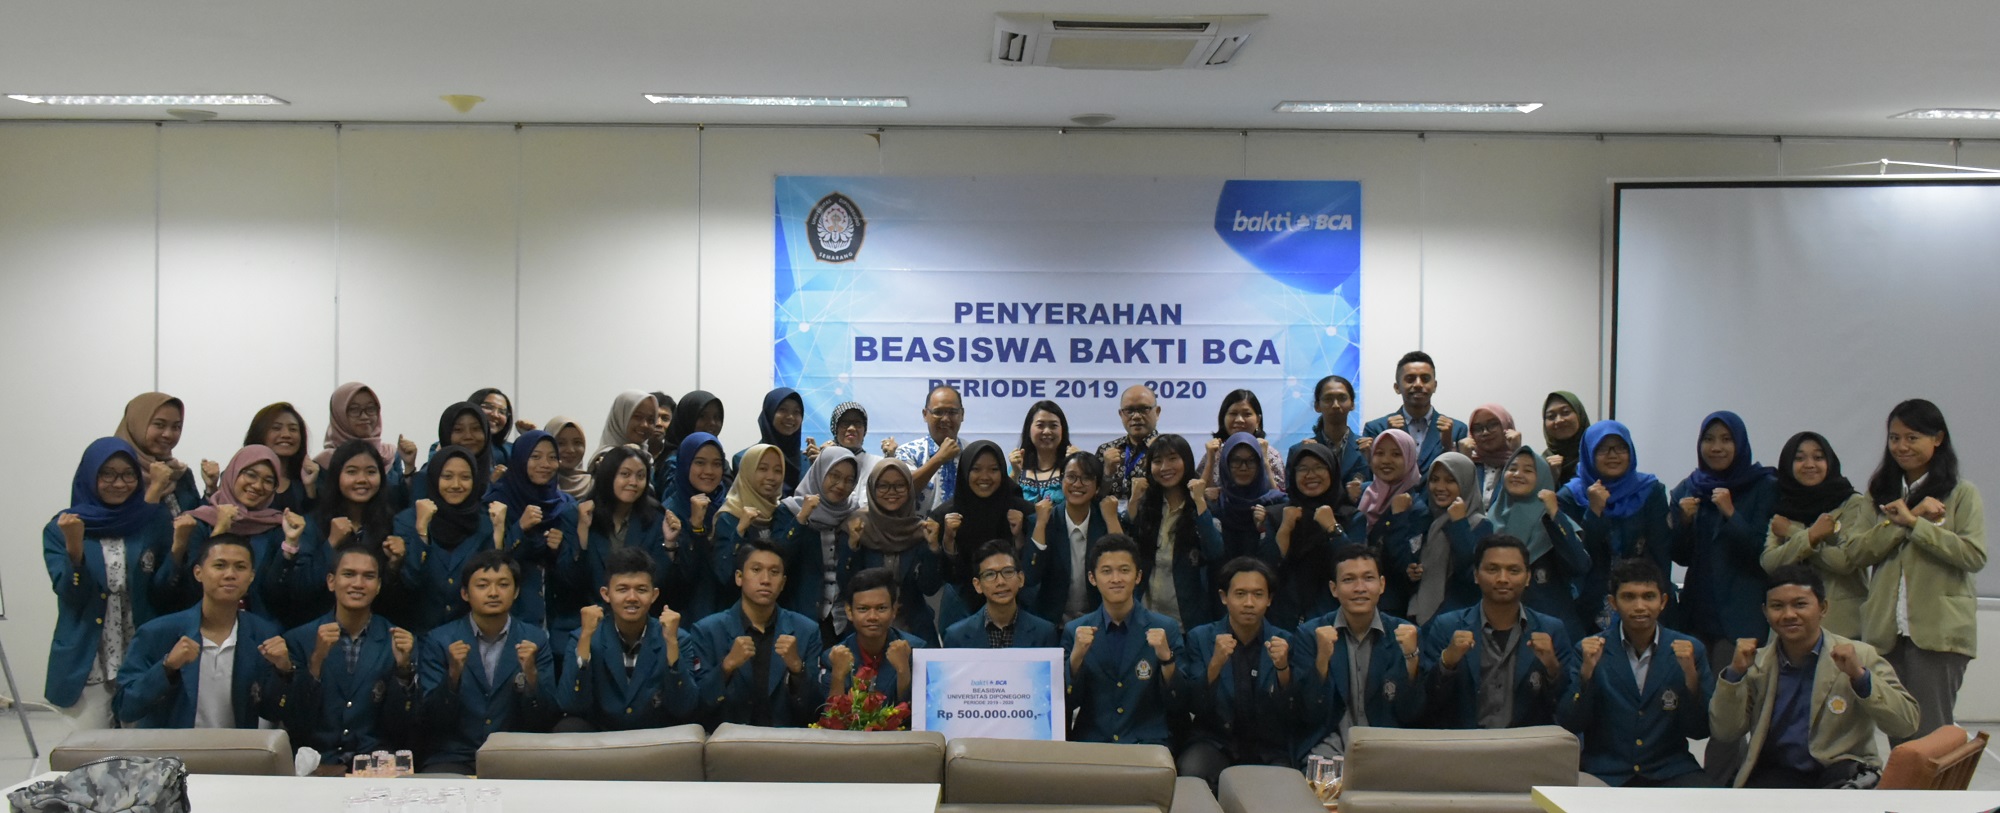 50 UNDIP Students Receive BCA Bakti Scholarships